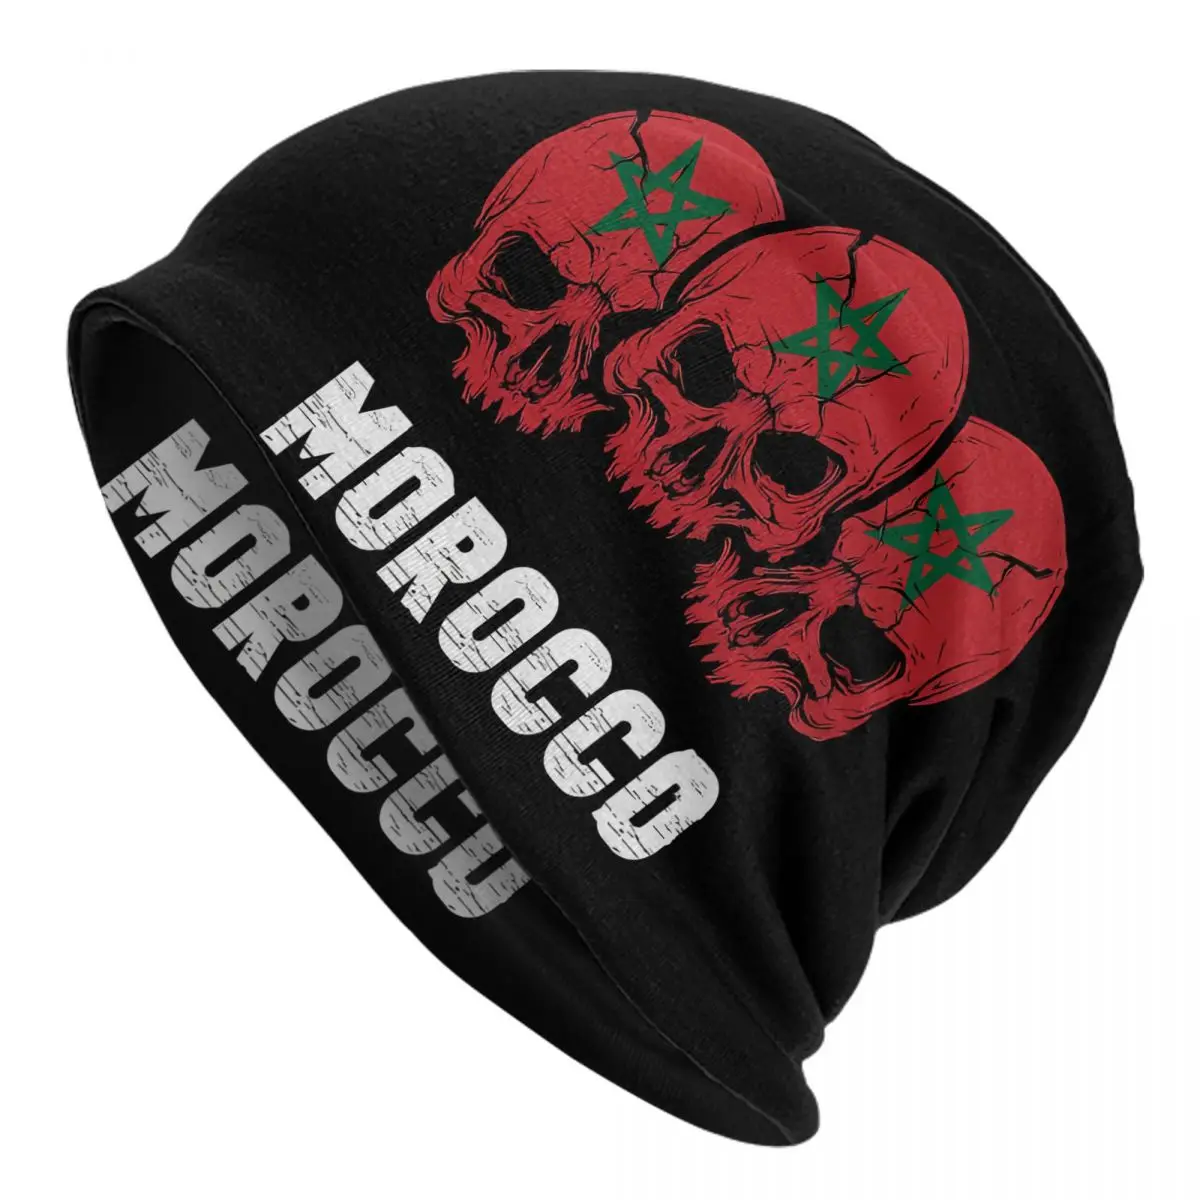 

Morocco Flag Outdoor Hats Skulls With Text Thin Hat Bonnet Hipster Skullies Beanies Caps Men Women's Earmuffs